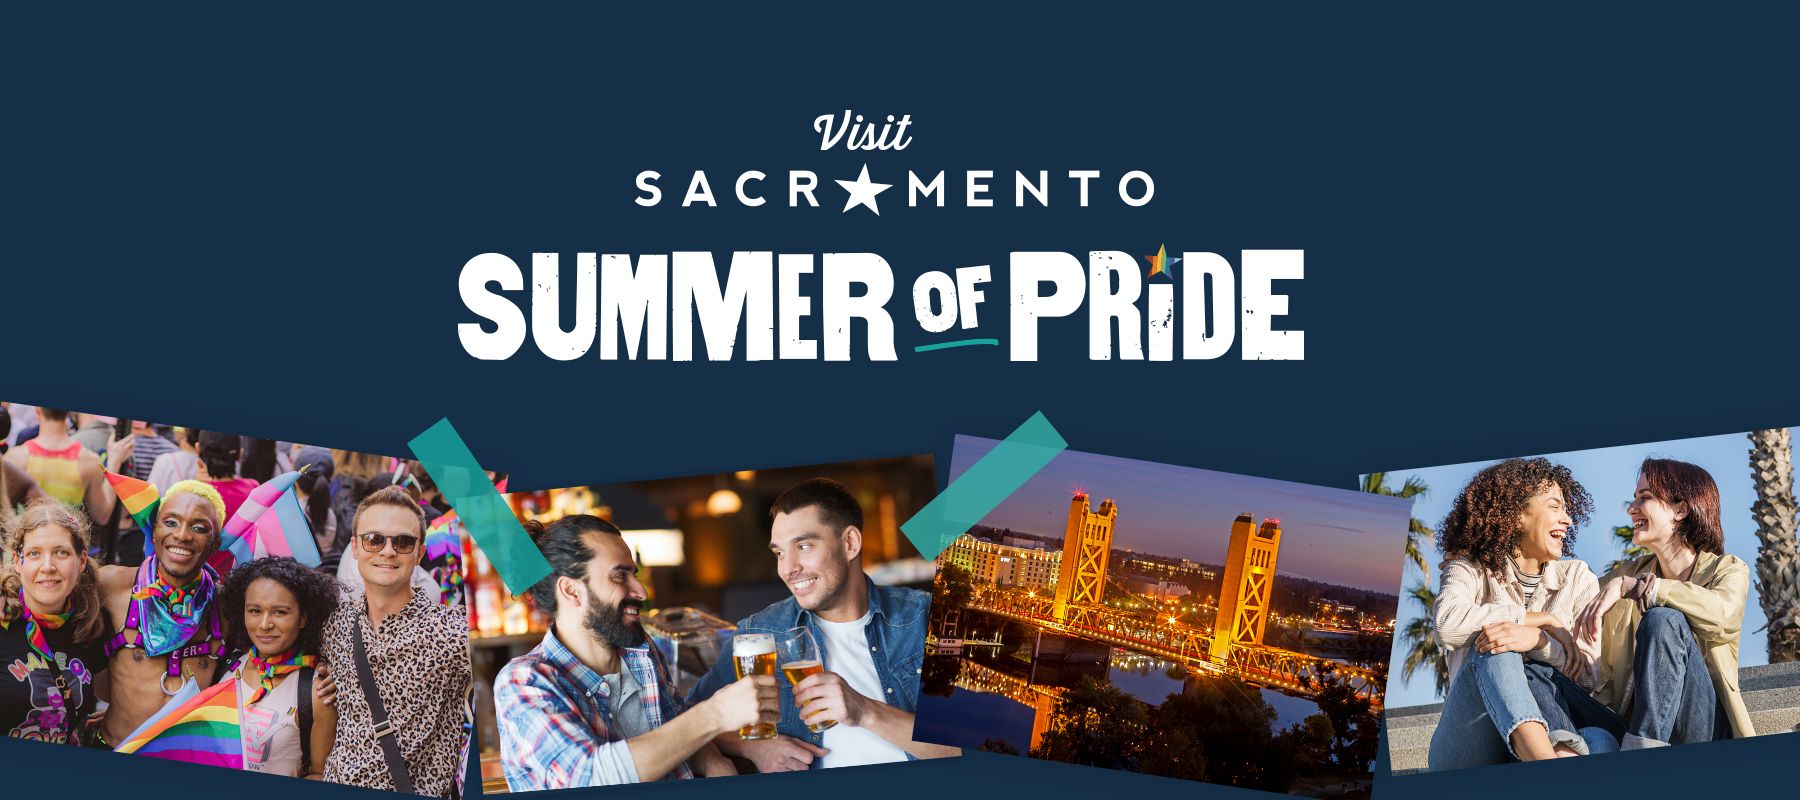 Visit Sacramento Summer of Pride hero